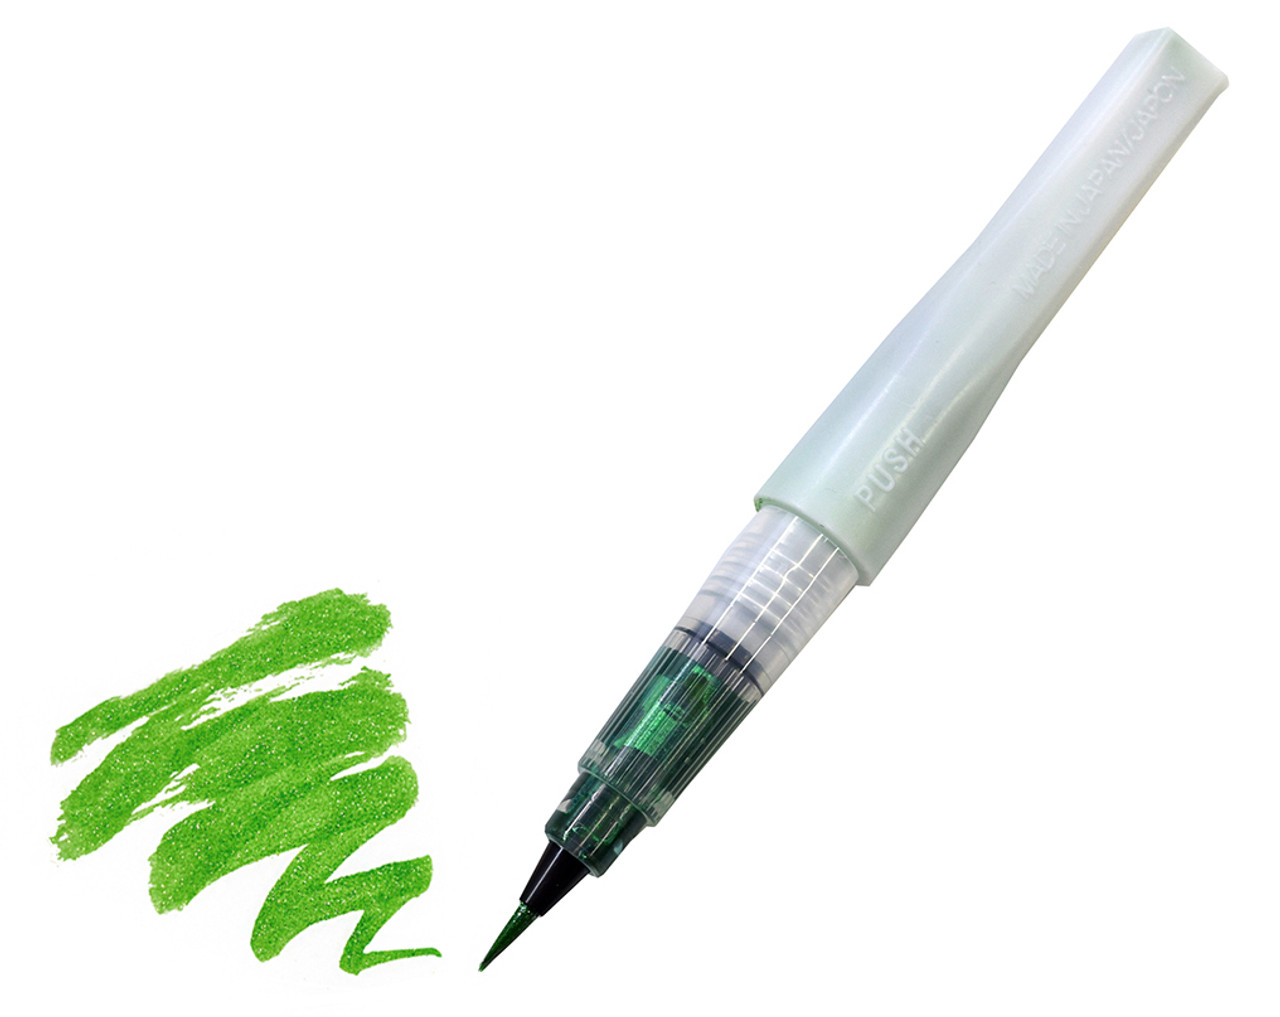 Fudenosuke Brush Pens  Colors, Set of 10 - Iron Leaf Press